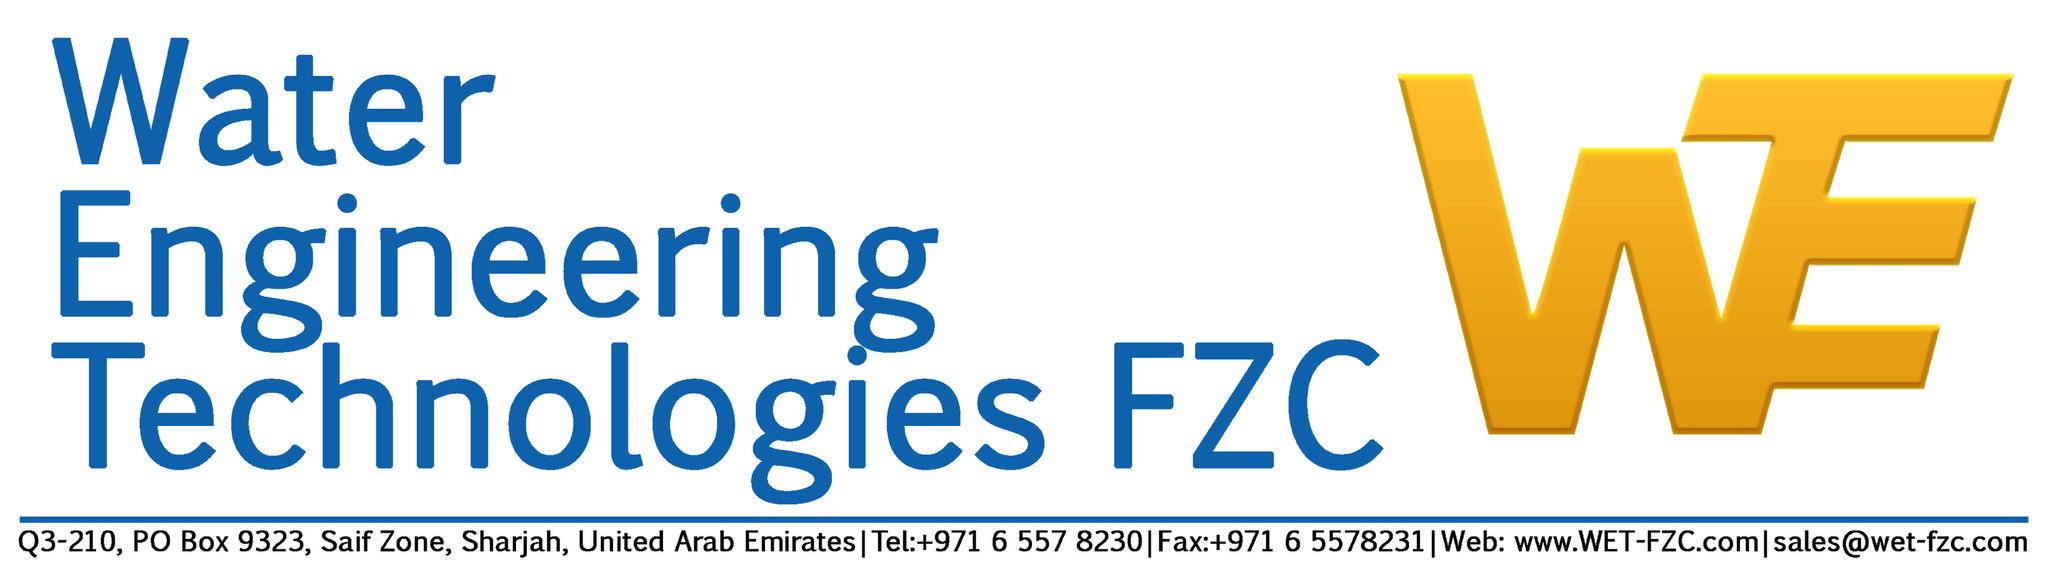 Water Engineering Technologies Fzc